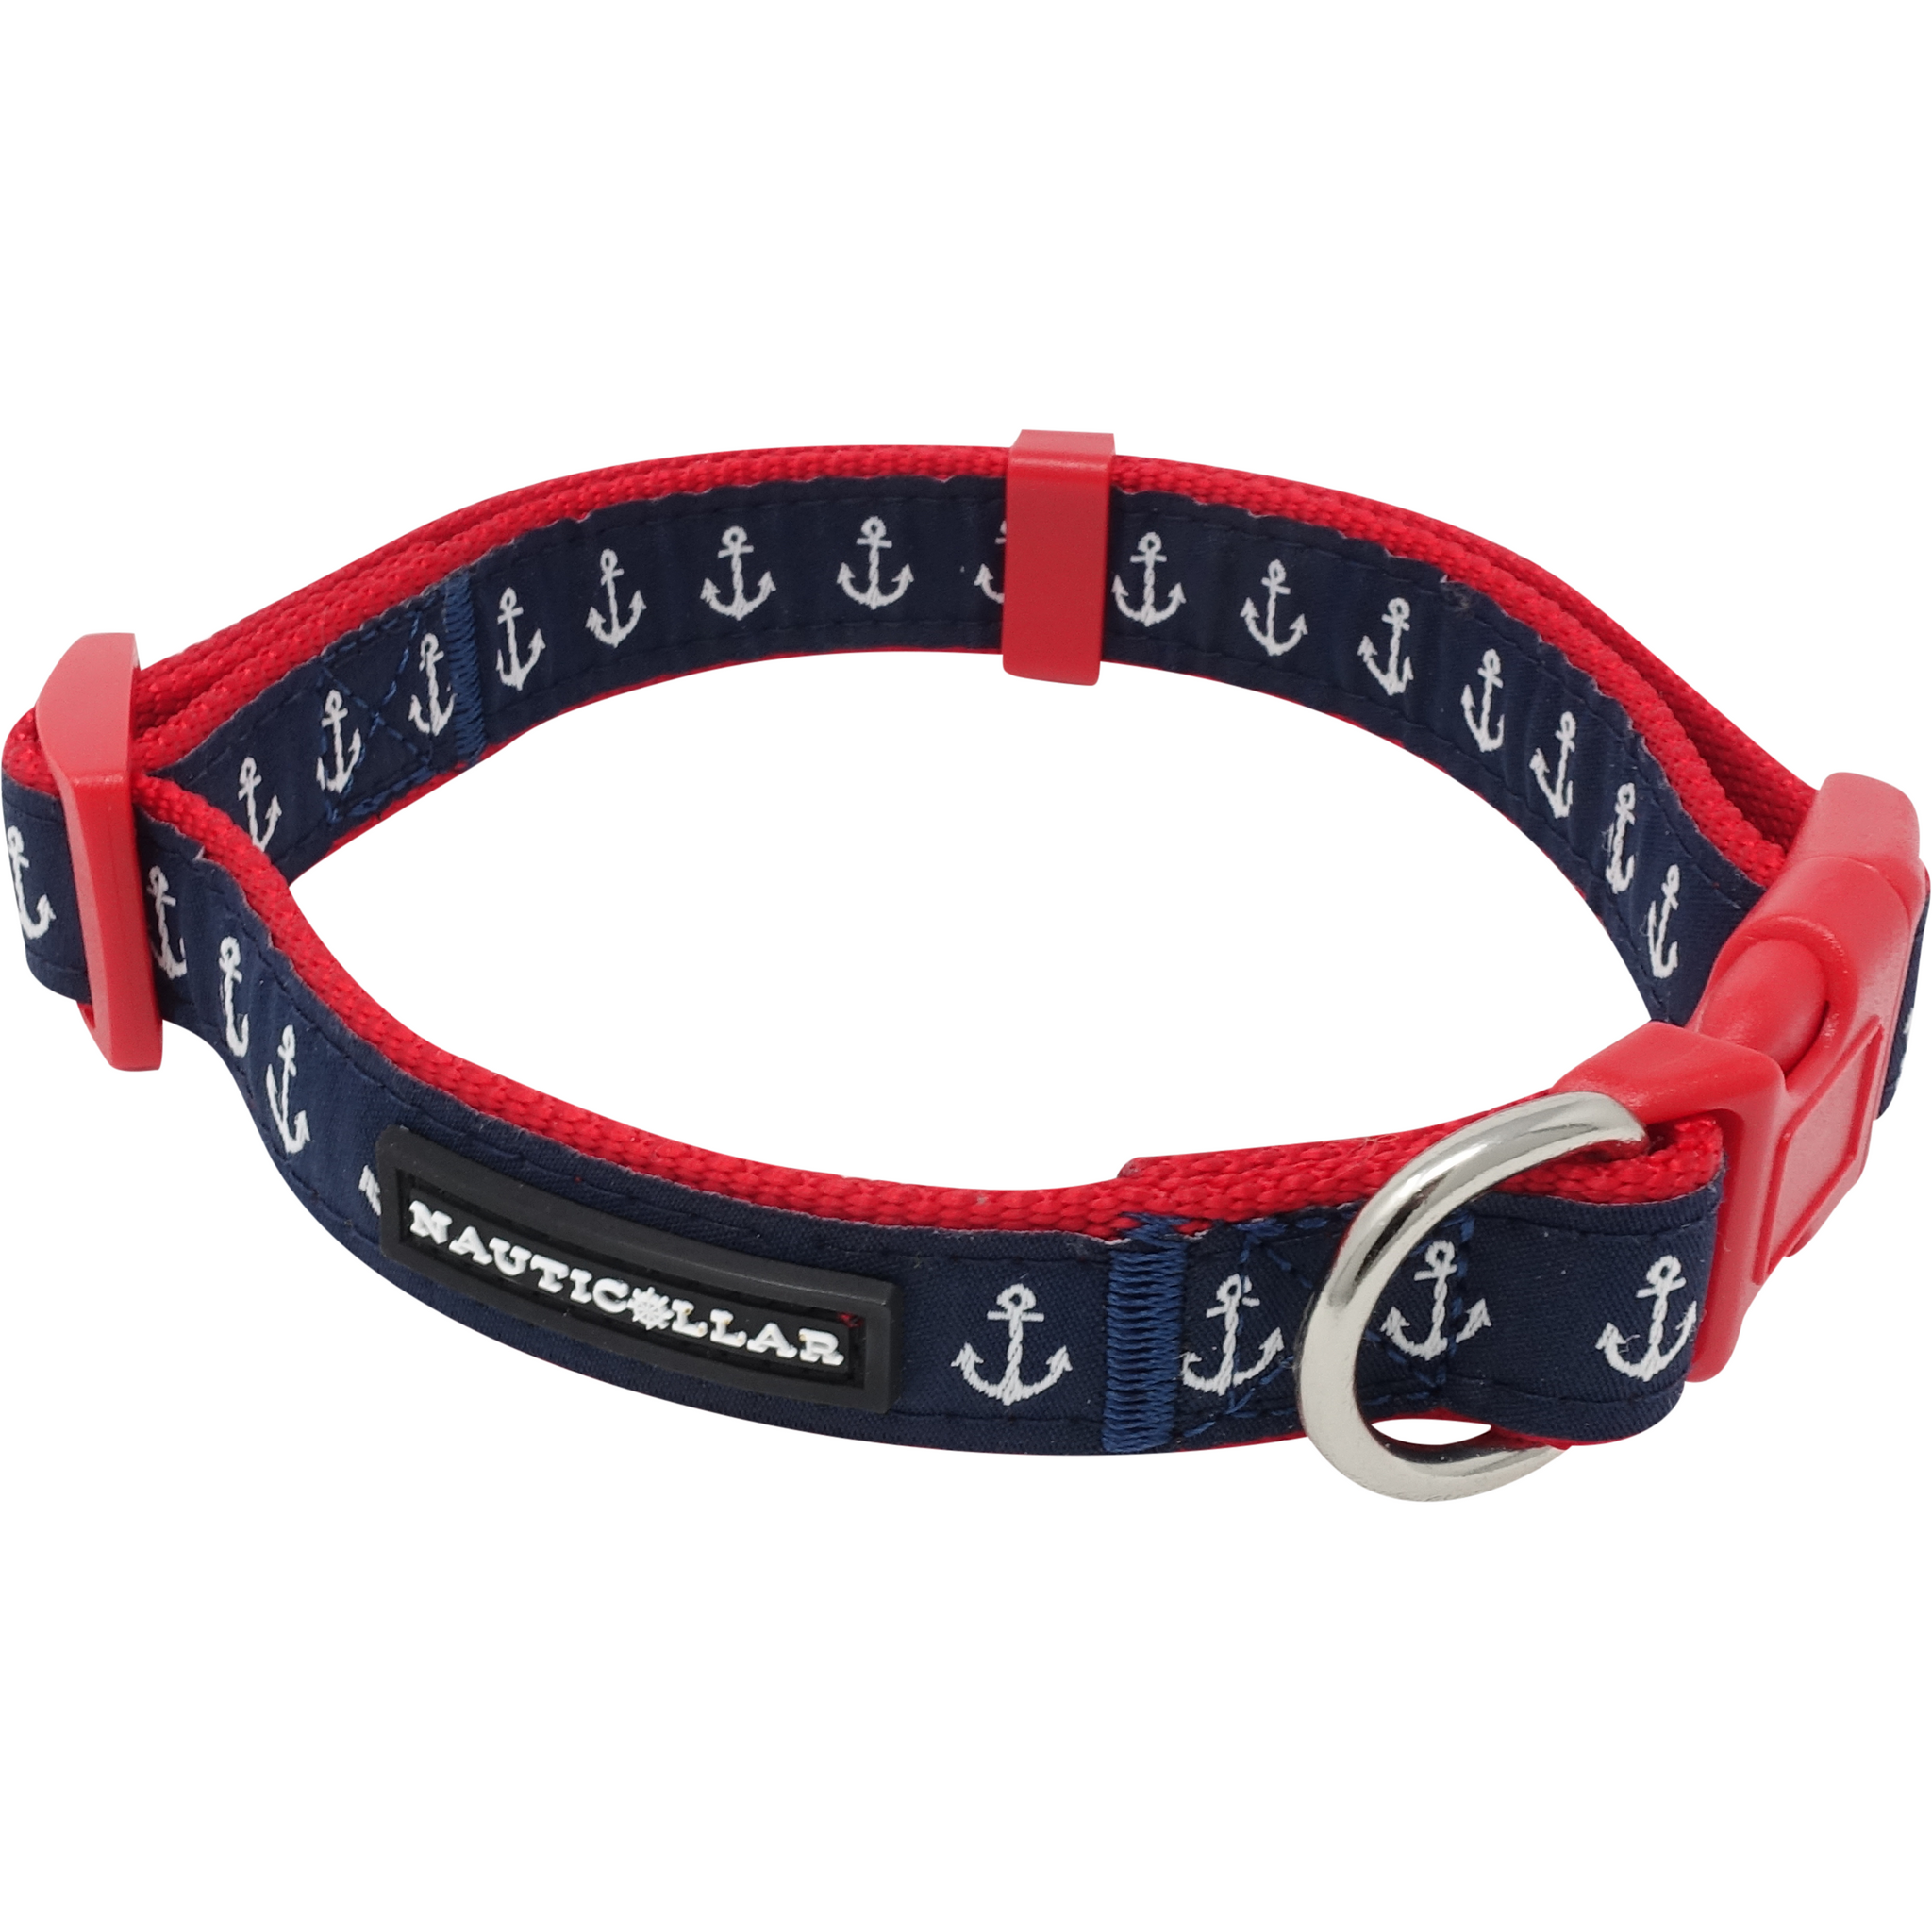 Nautical Anchor Dog Collar by Nauticollar - Adjustable - Navy Blue